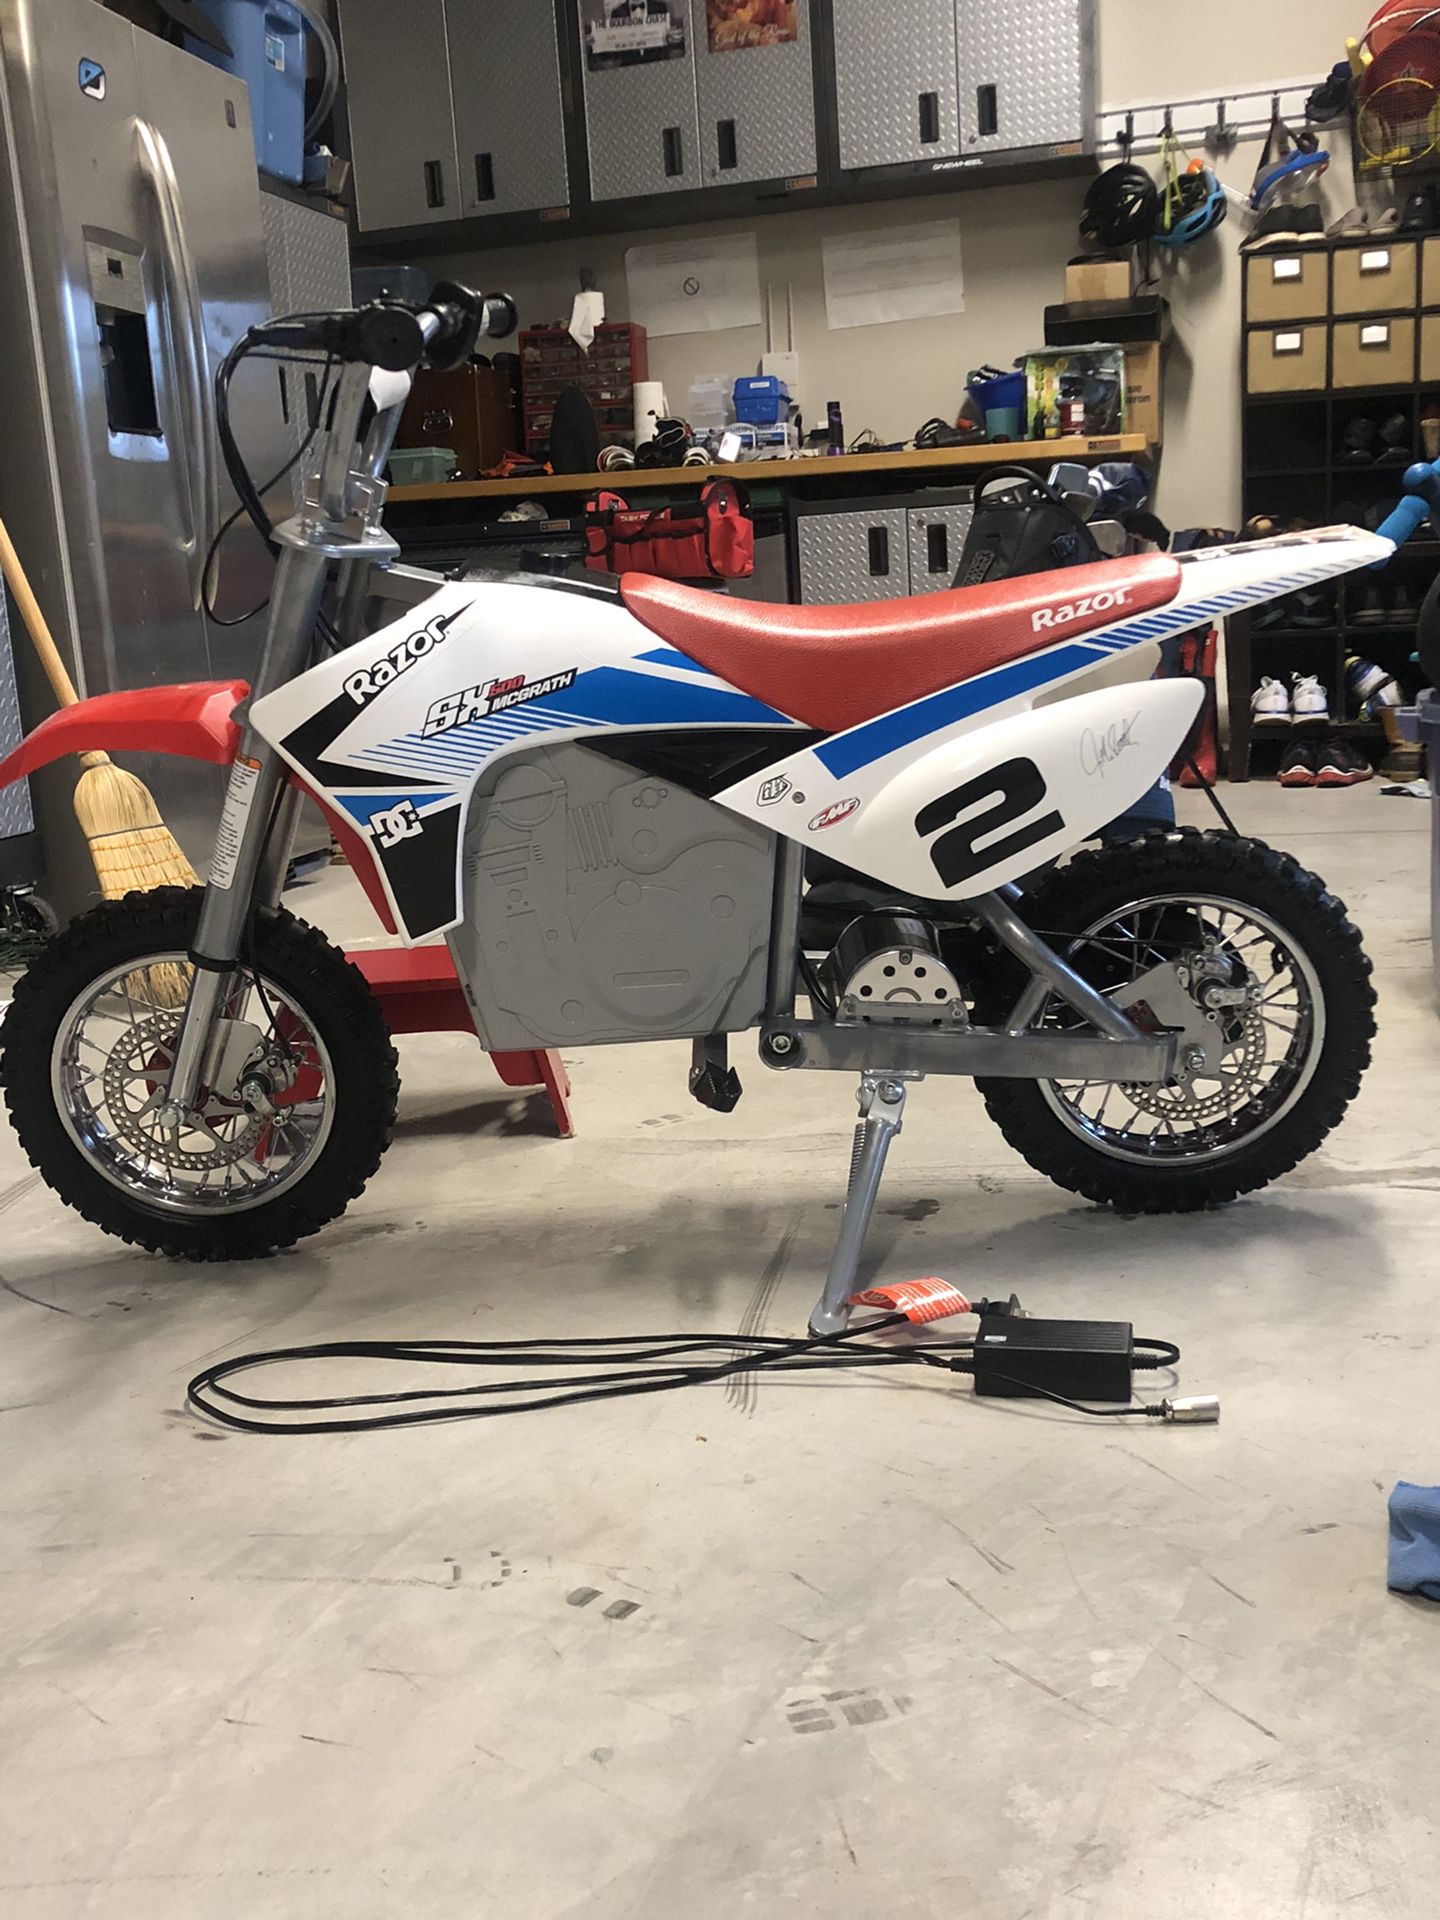 Razor sx500 electric dirt bike (Great deal)